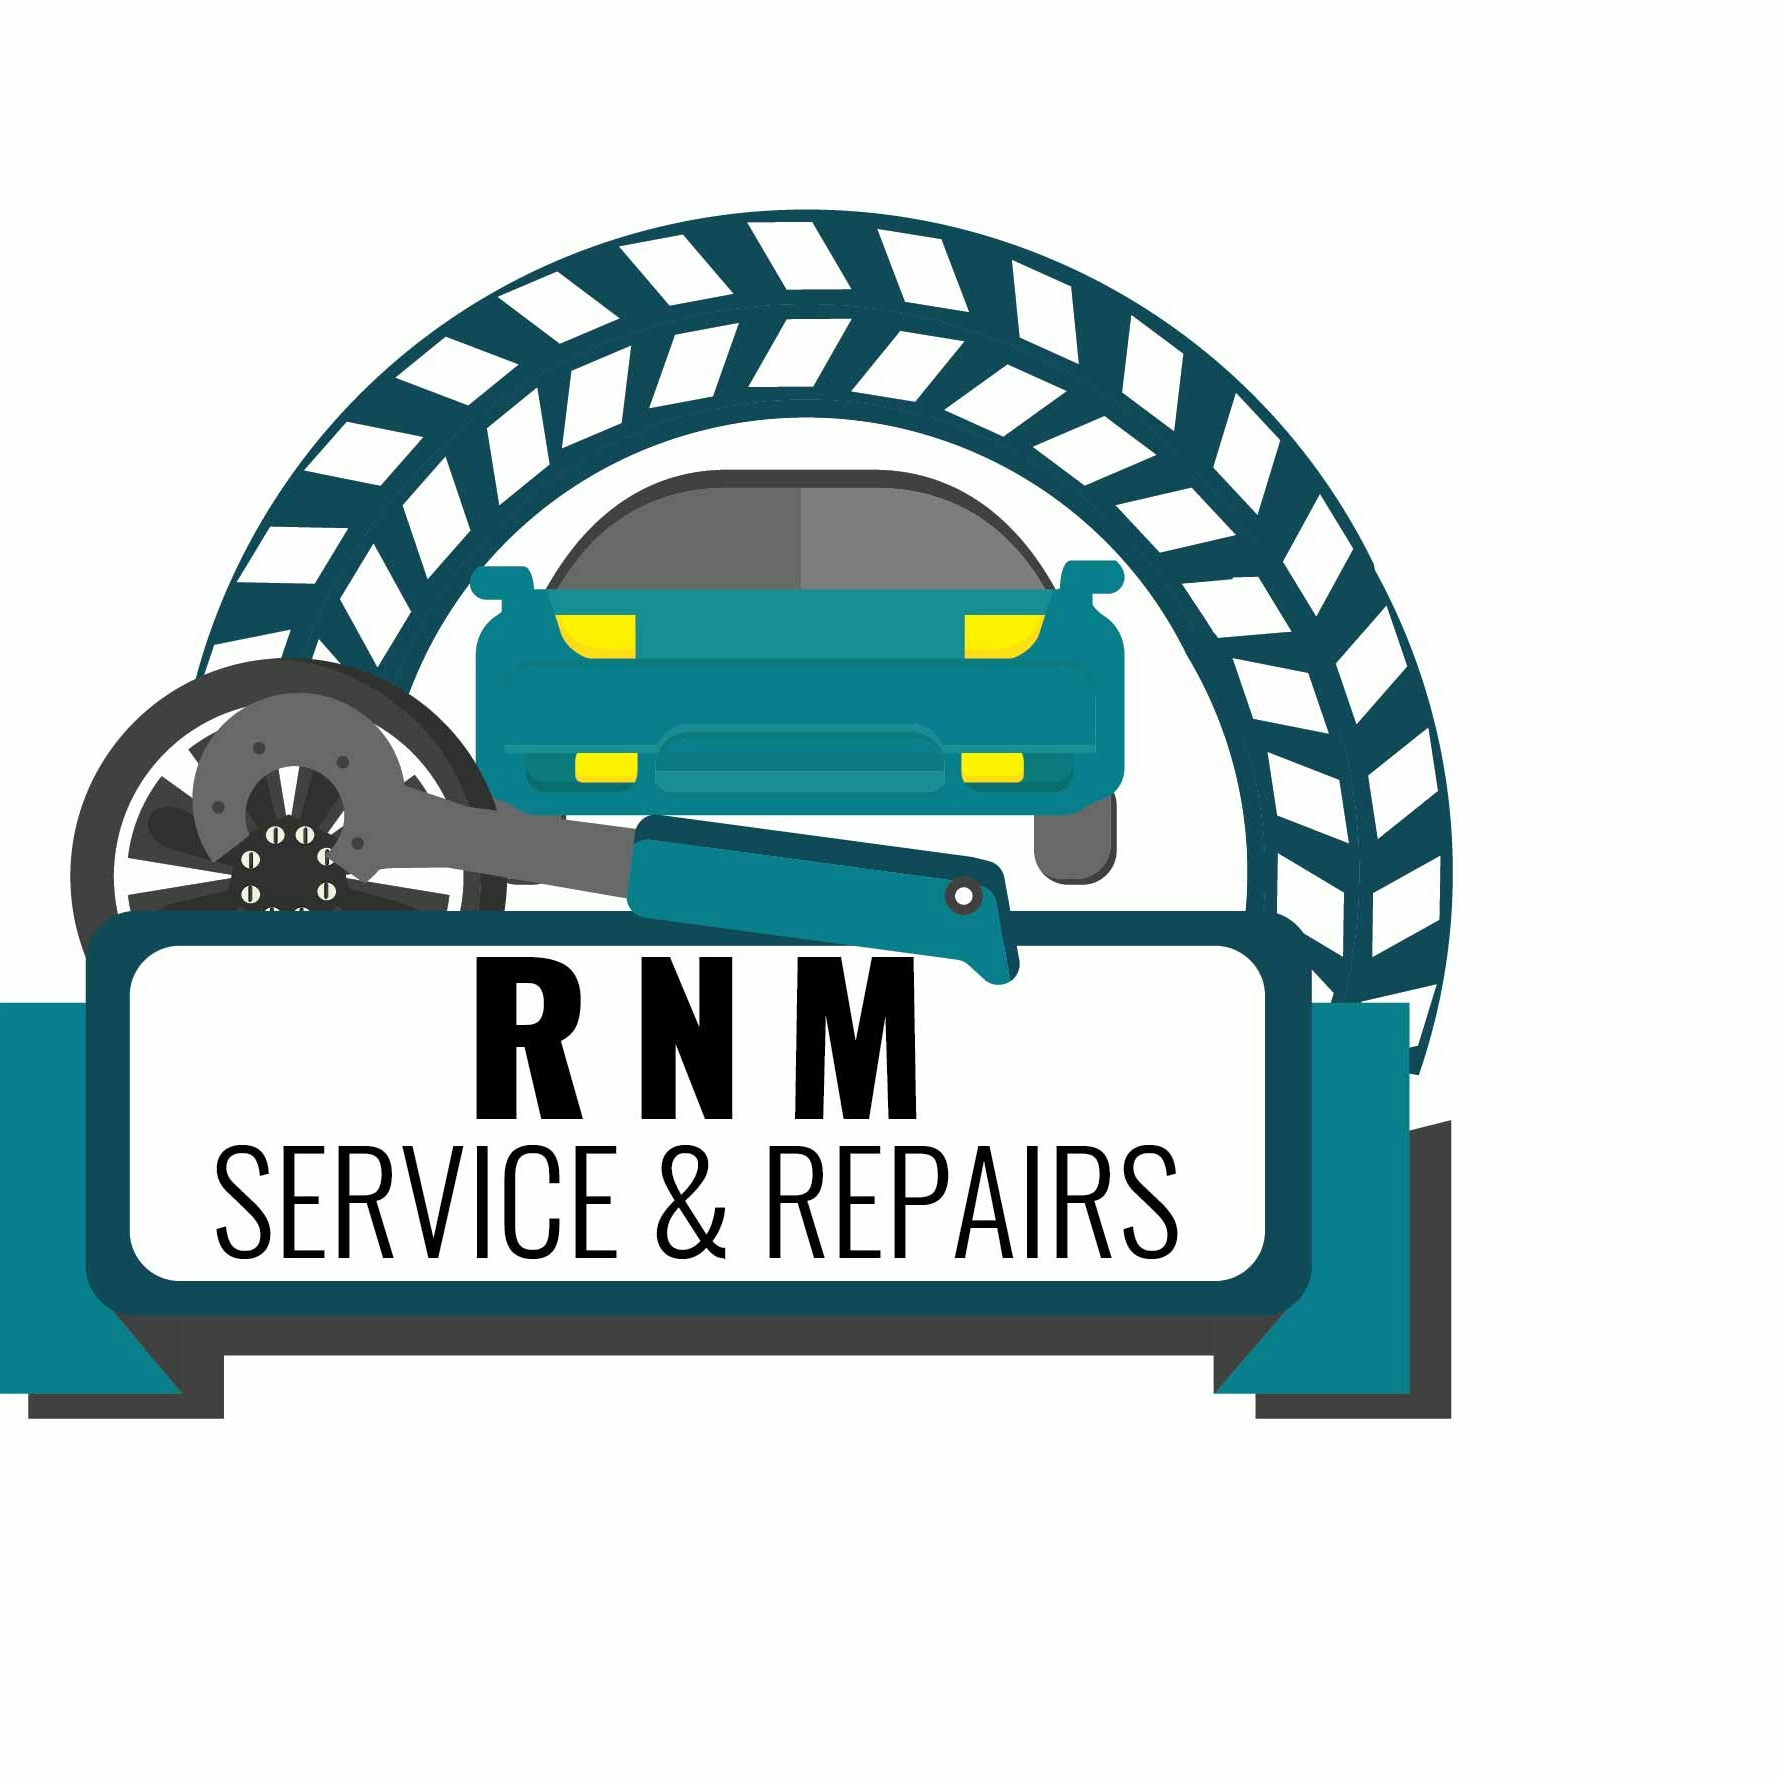 RNM Service & Repairs